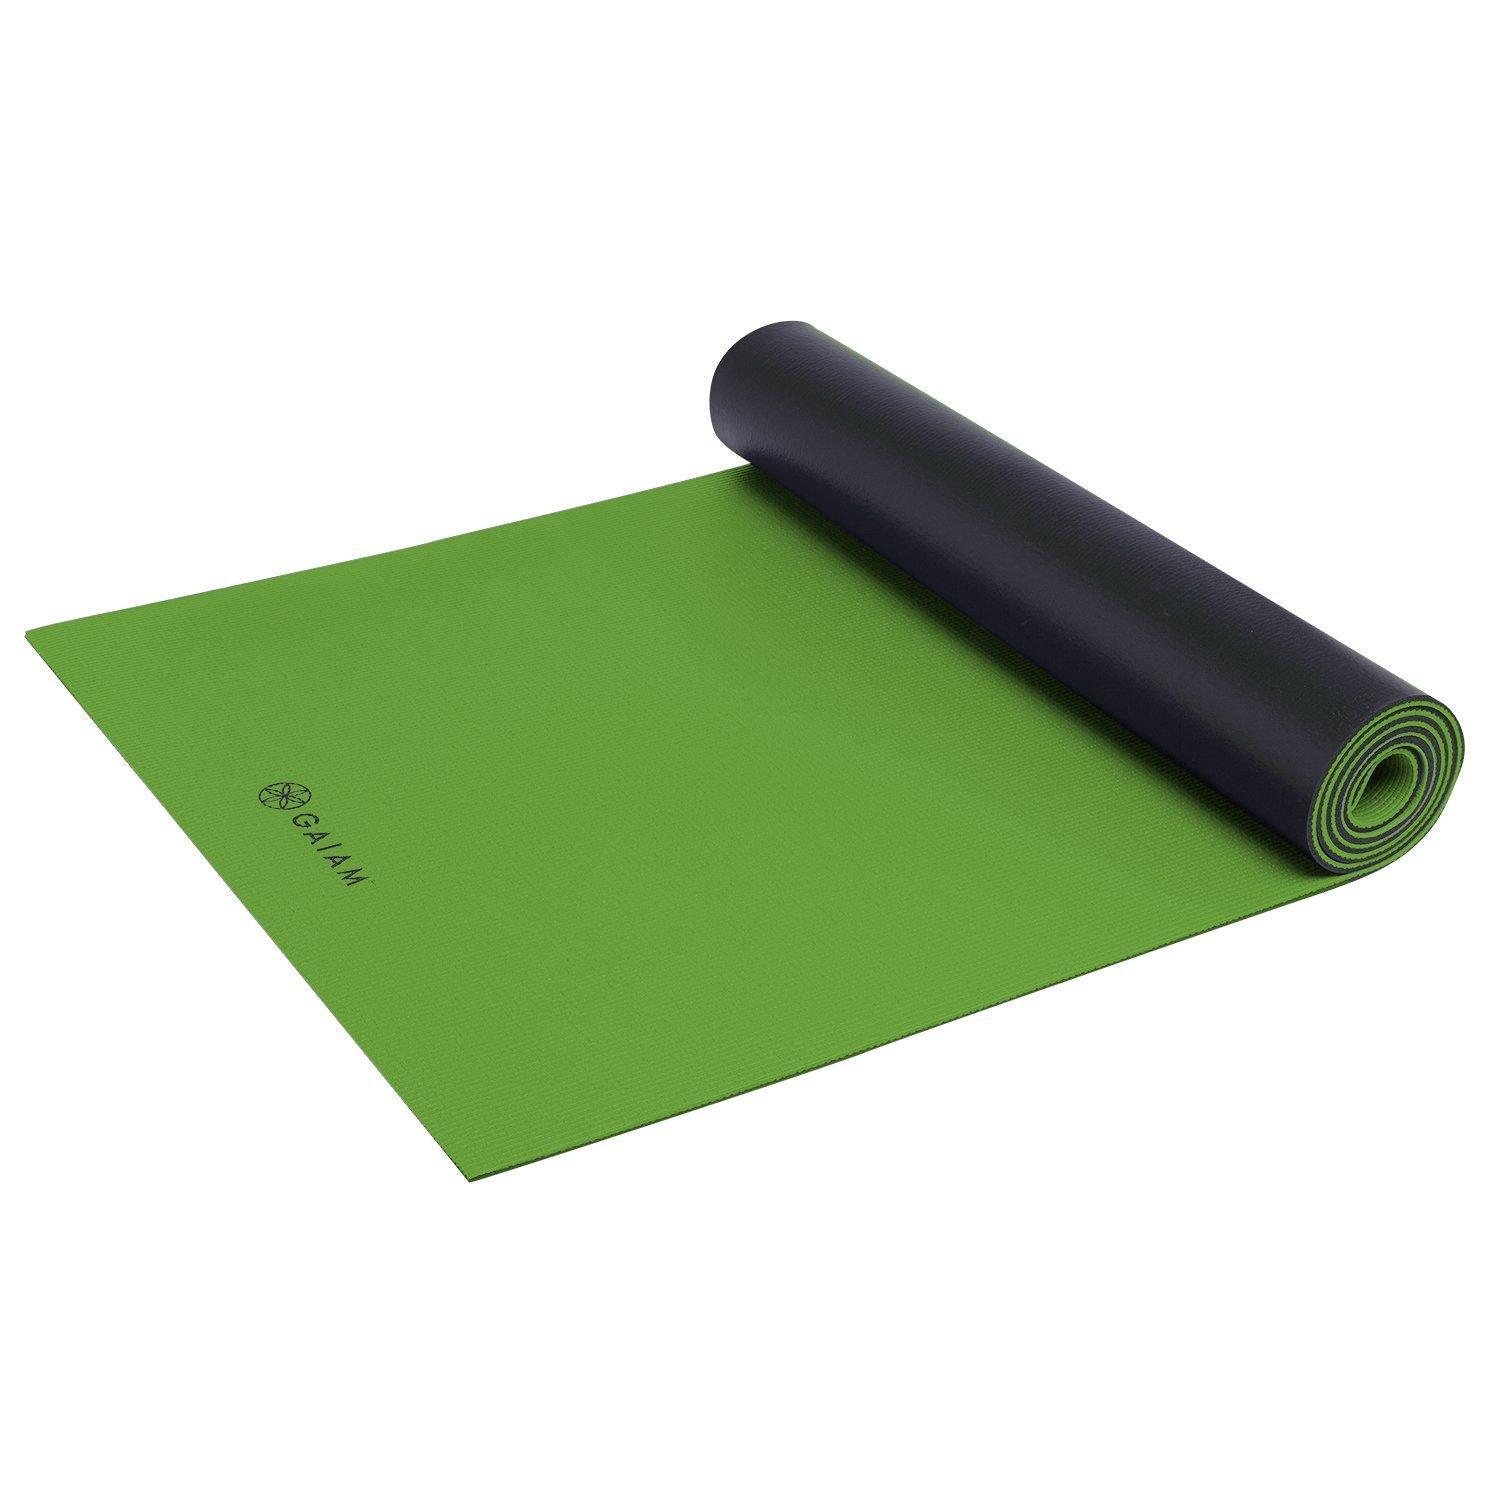 Gaiam Athletic Yoga Mat - 5mm - Groen